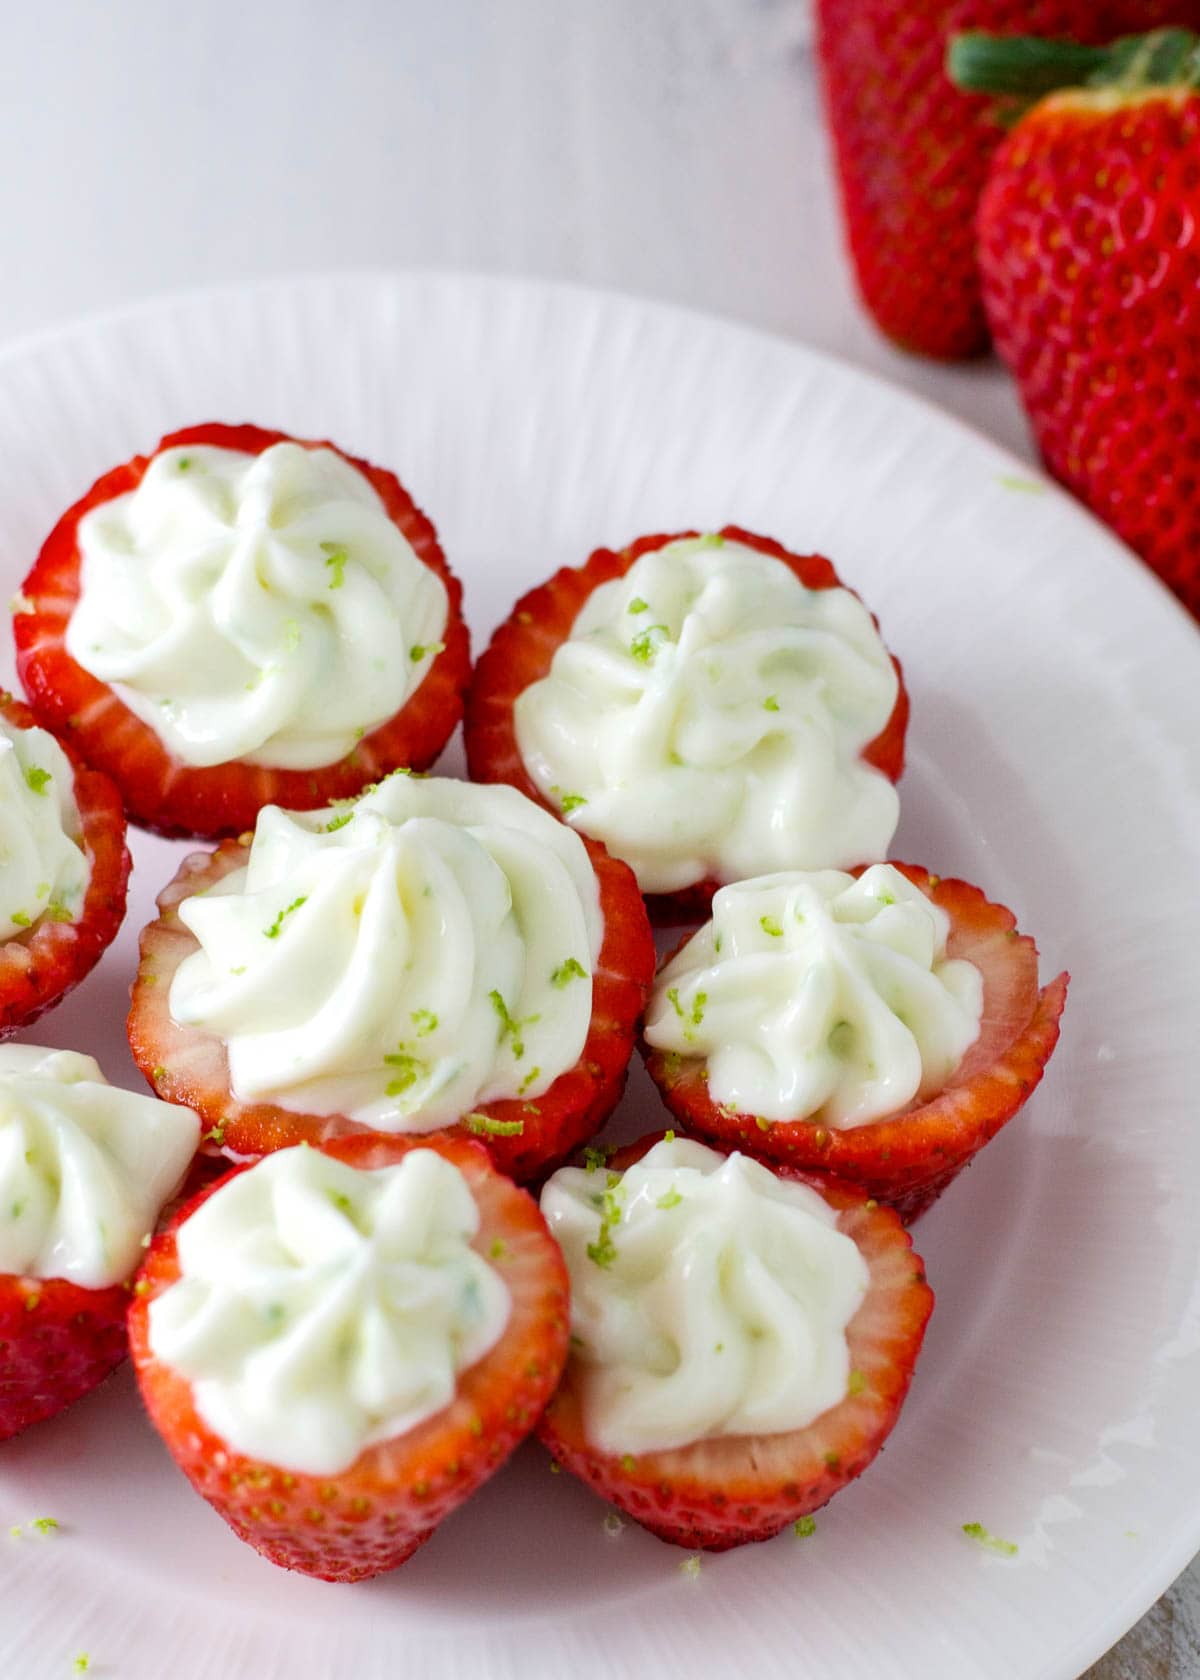 stuffed strawberries on plate